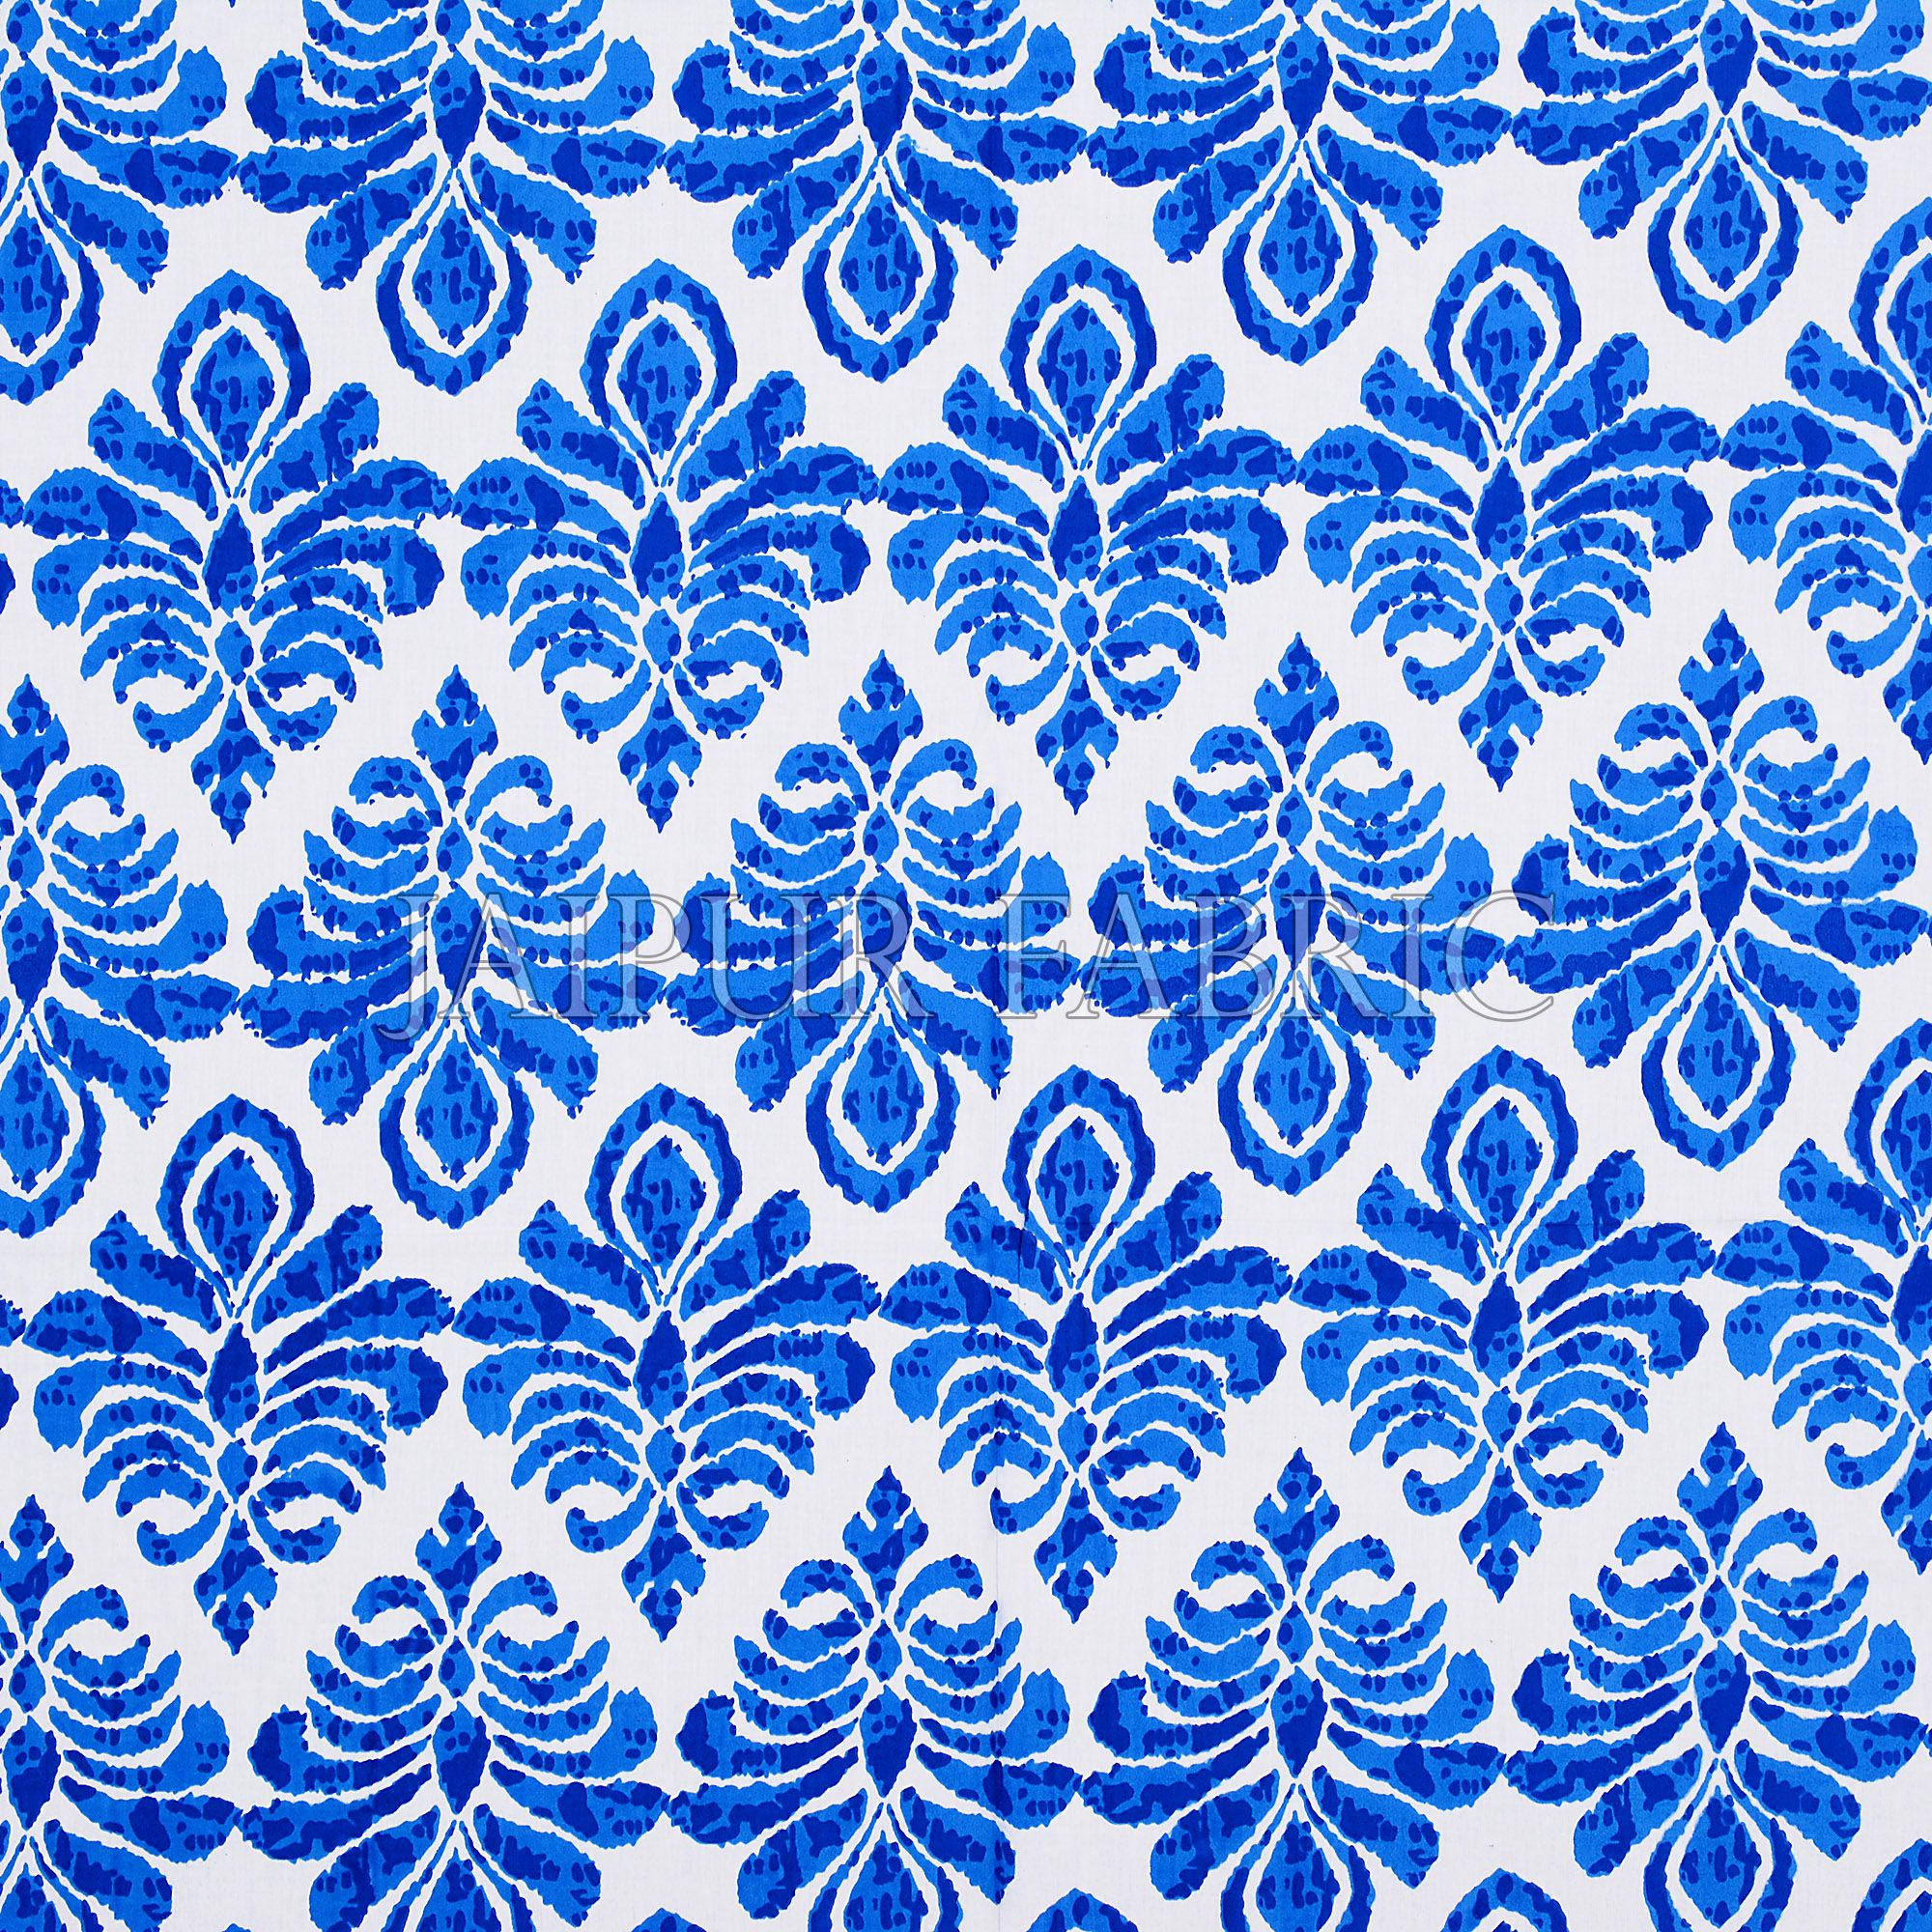 Blue Border Polka Frame Whit Base Blue Flower Print Super Fine Poplin Cotton Double Bedsheet With Two Pillow